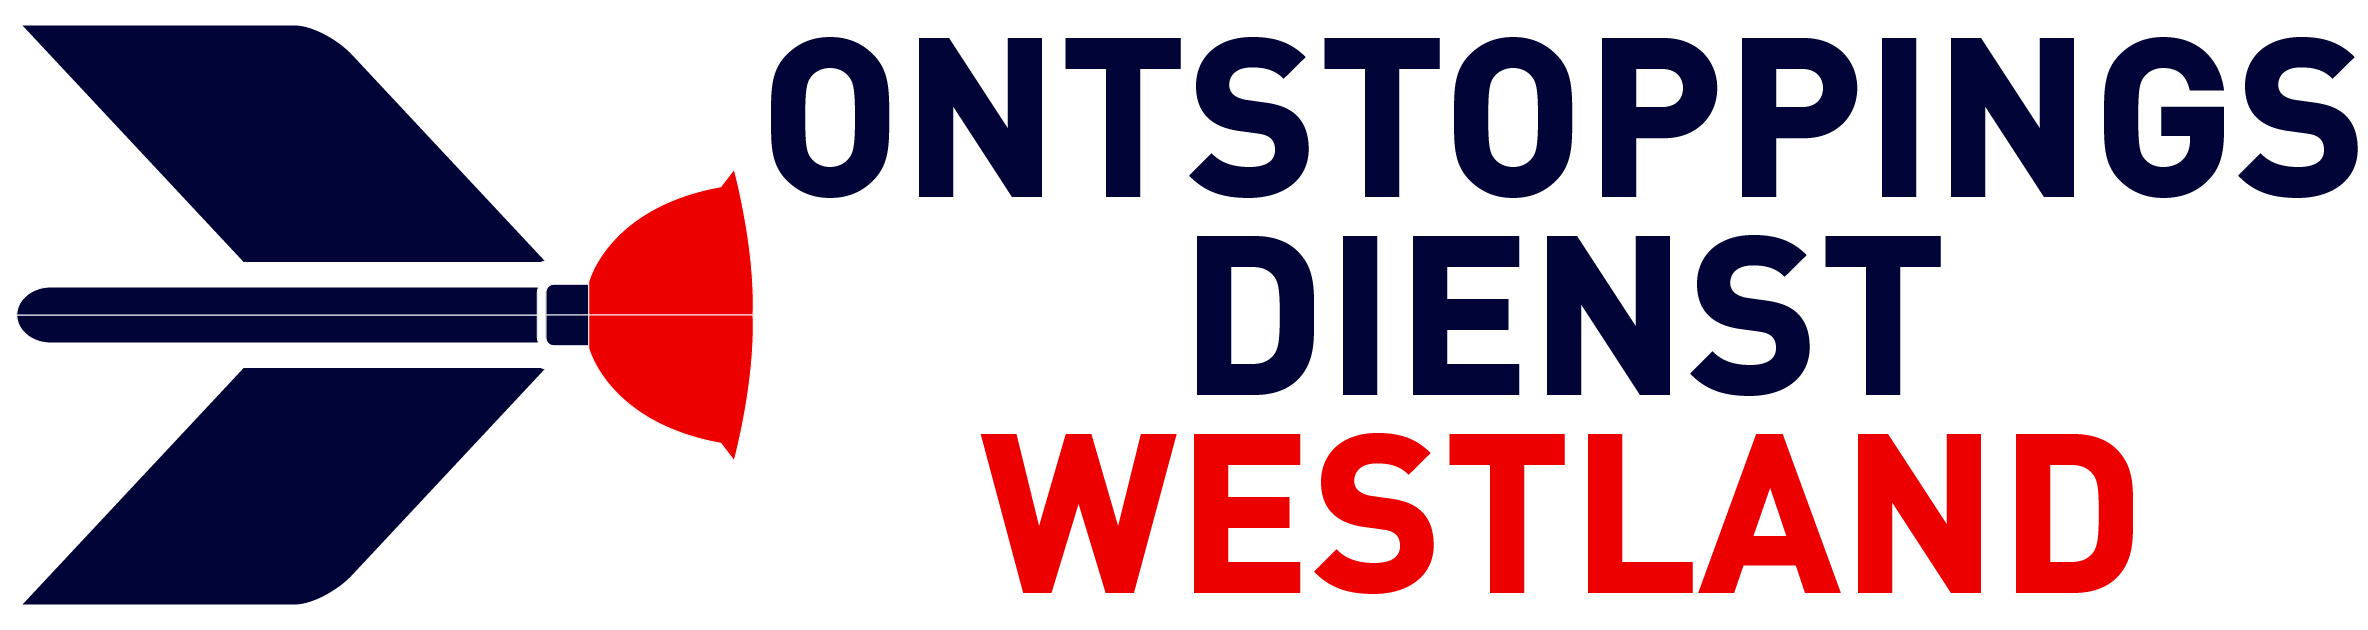 Ontstoppingsdienst Westland logo